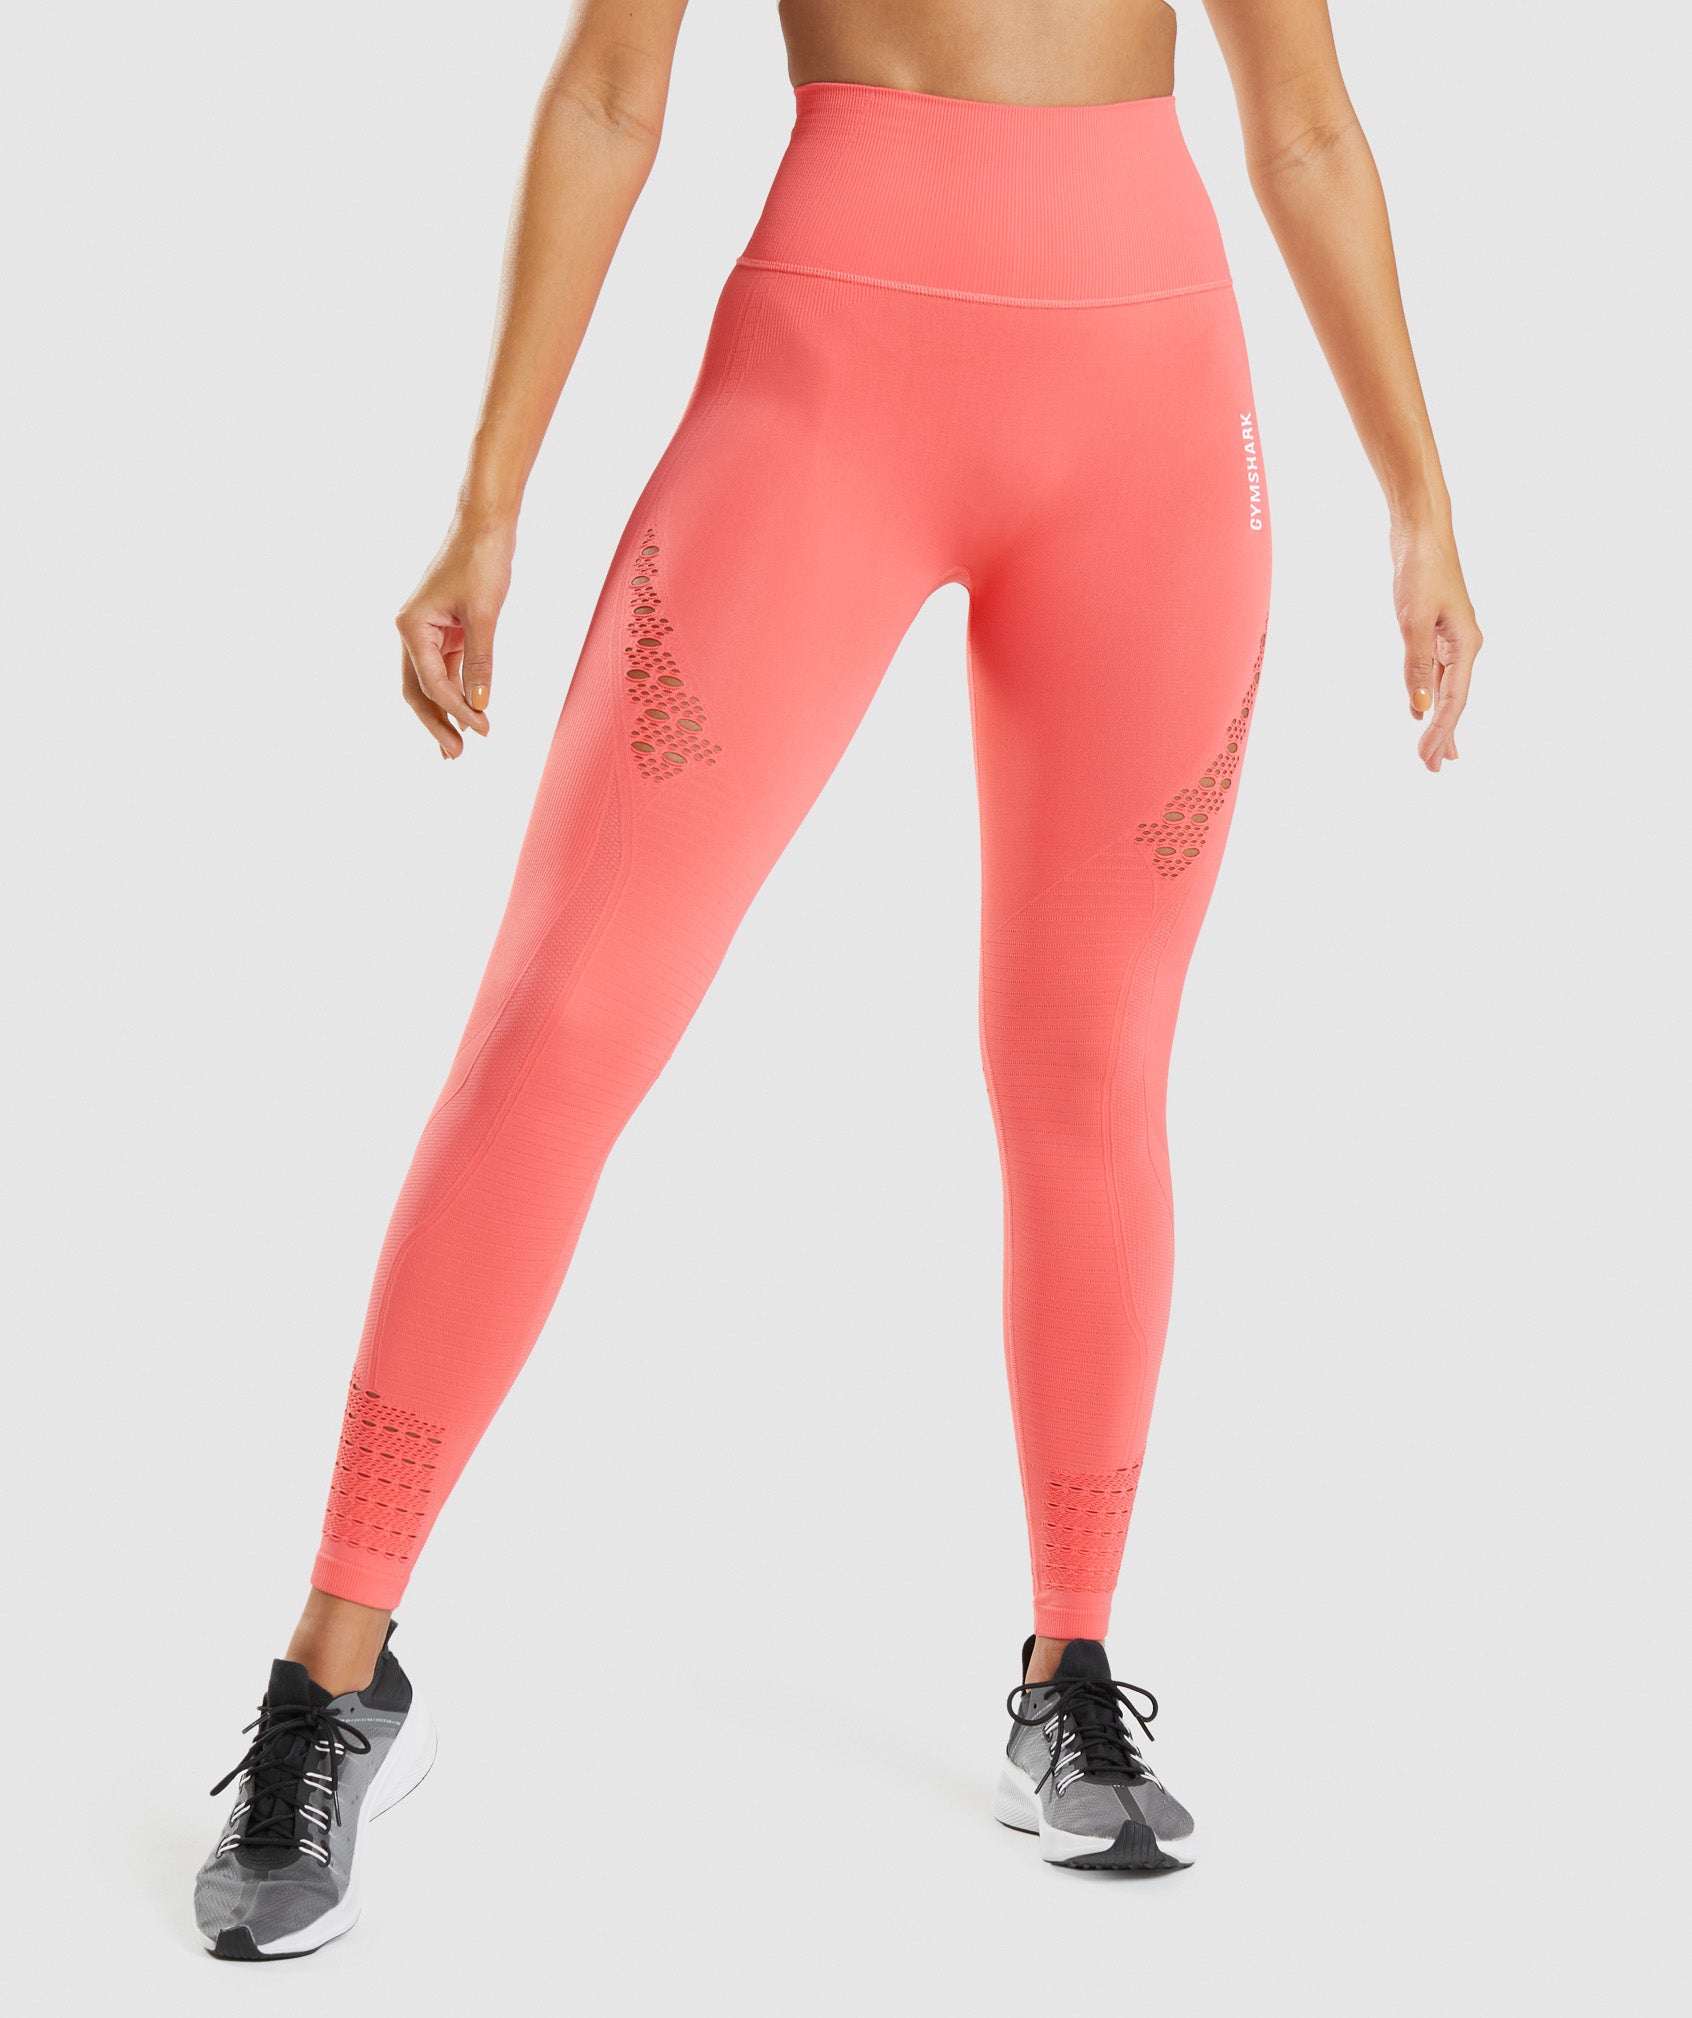 Gymshark Leggings Fleur Texture Light Pink Marl Athletic Gym Women XS  X-Small